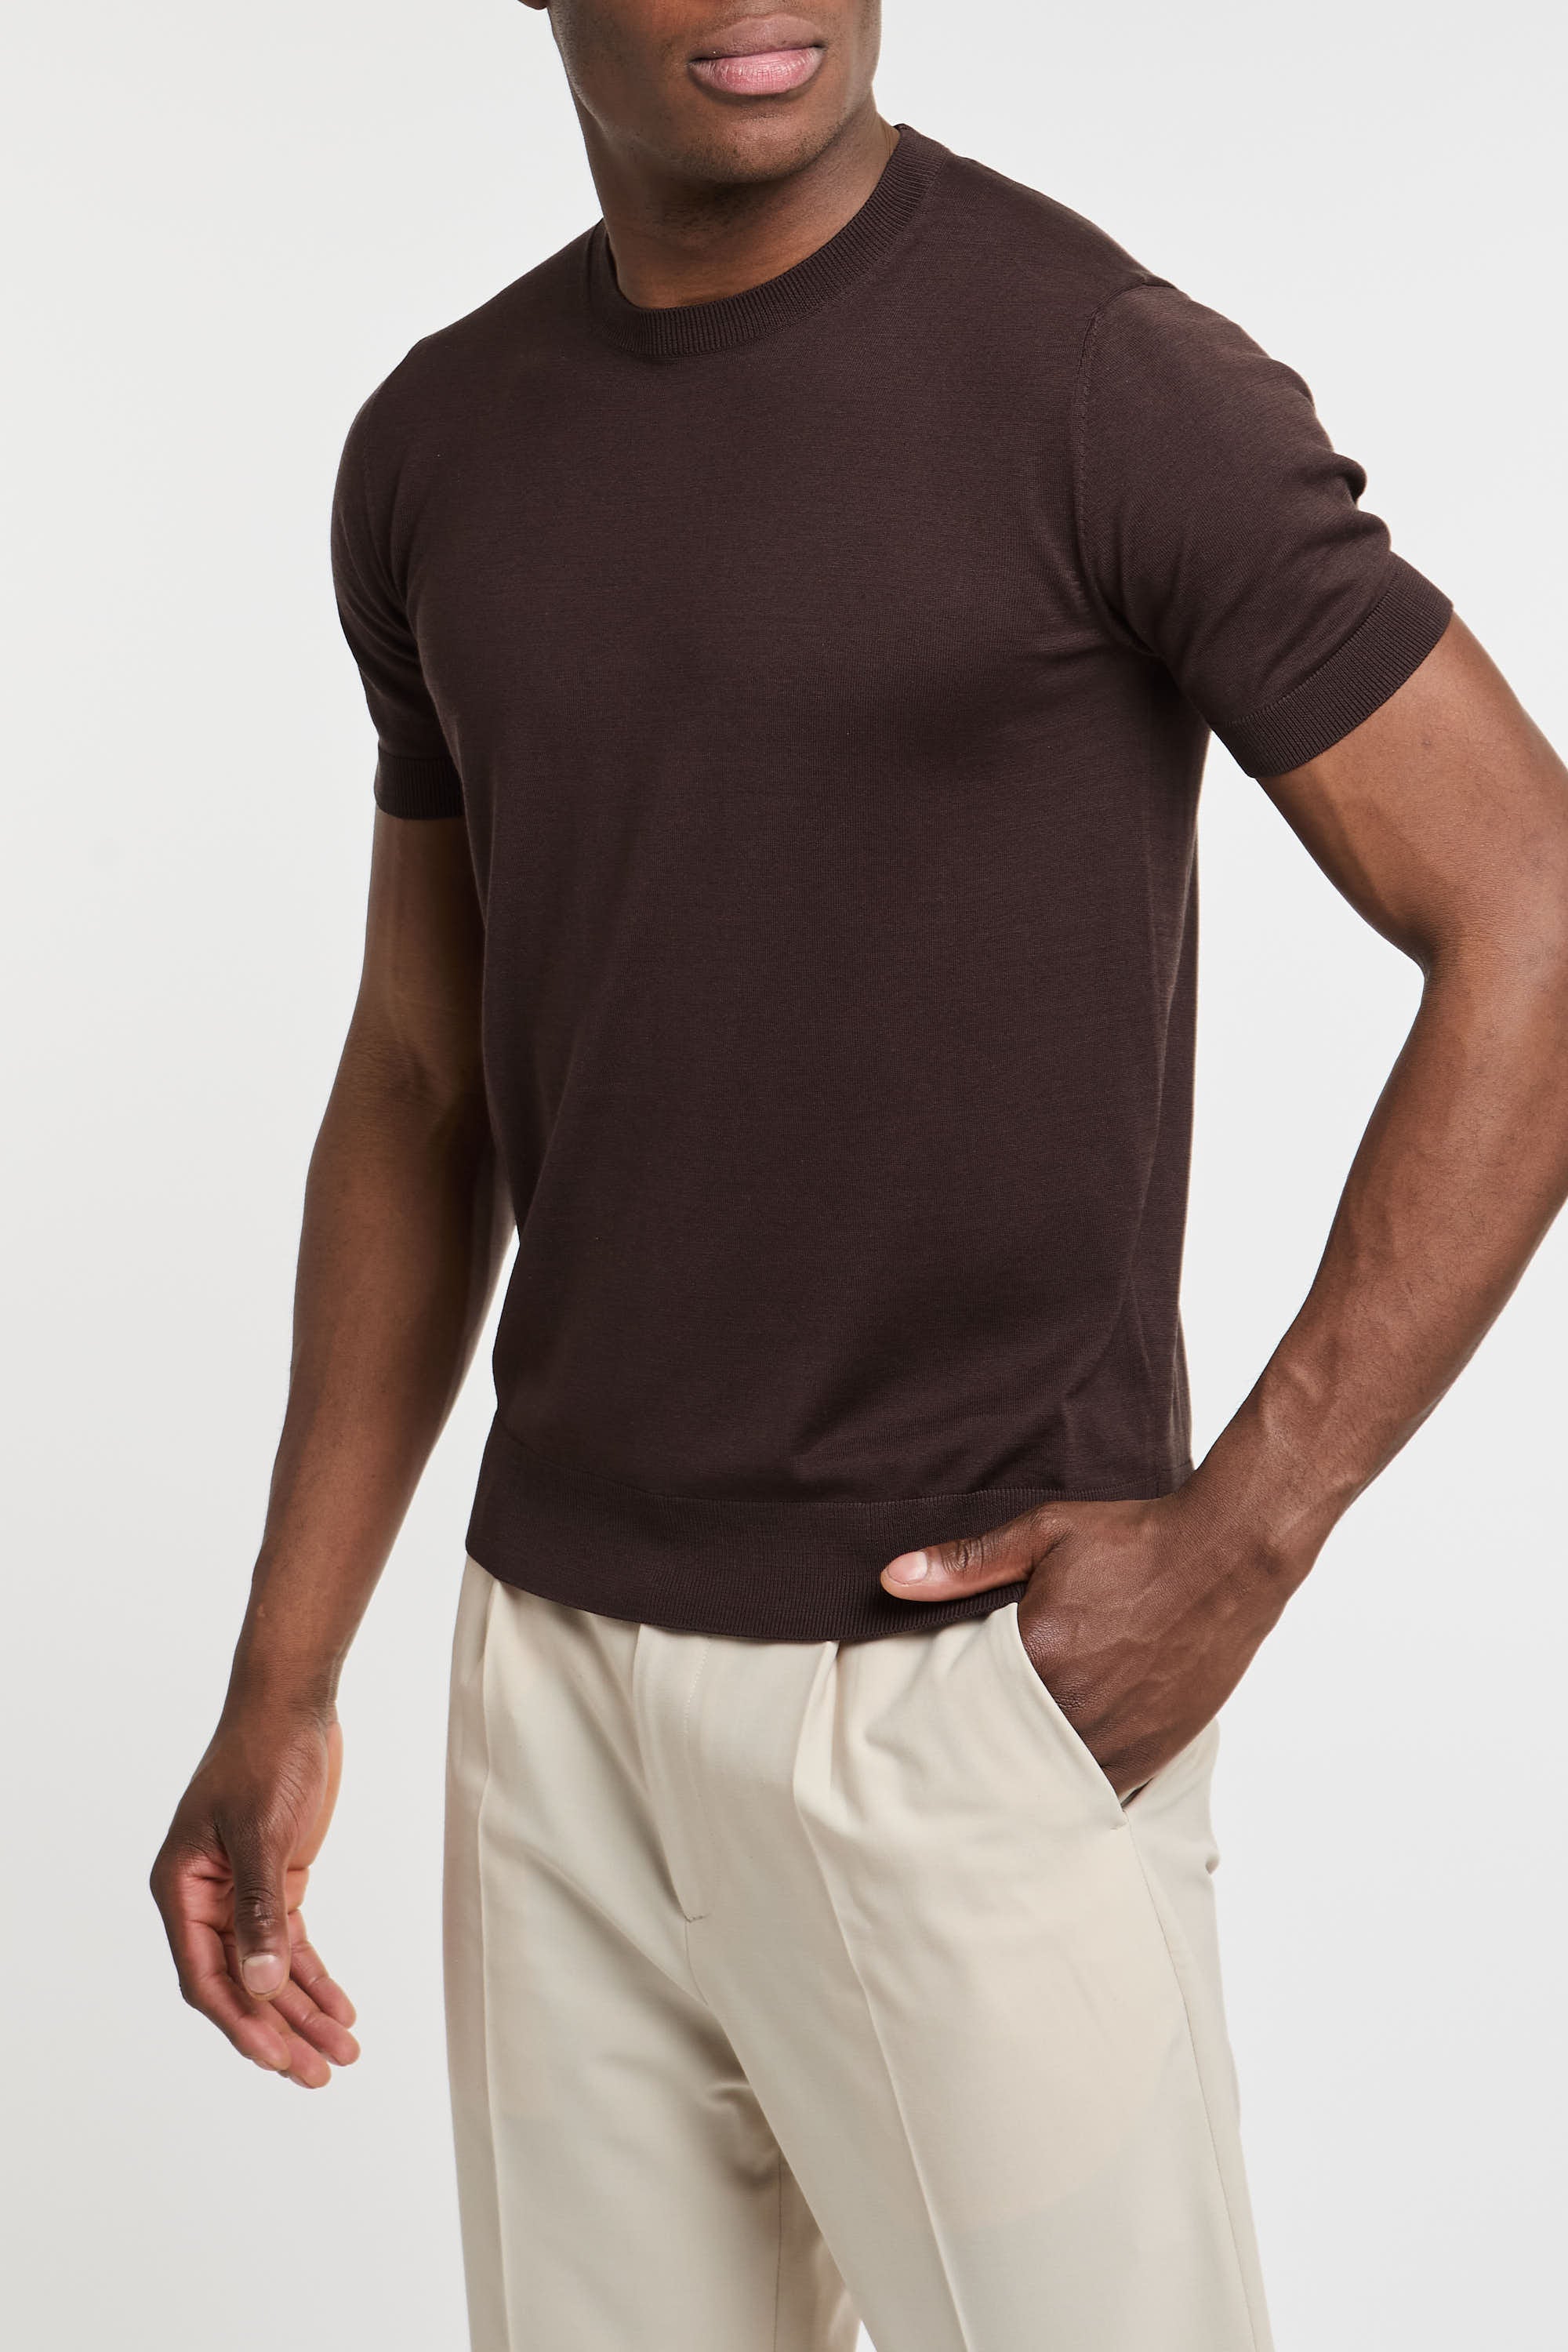 Paolo Pecora Silk/Cotton Blend Brown T-Shirt-1